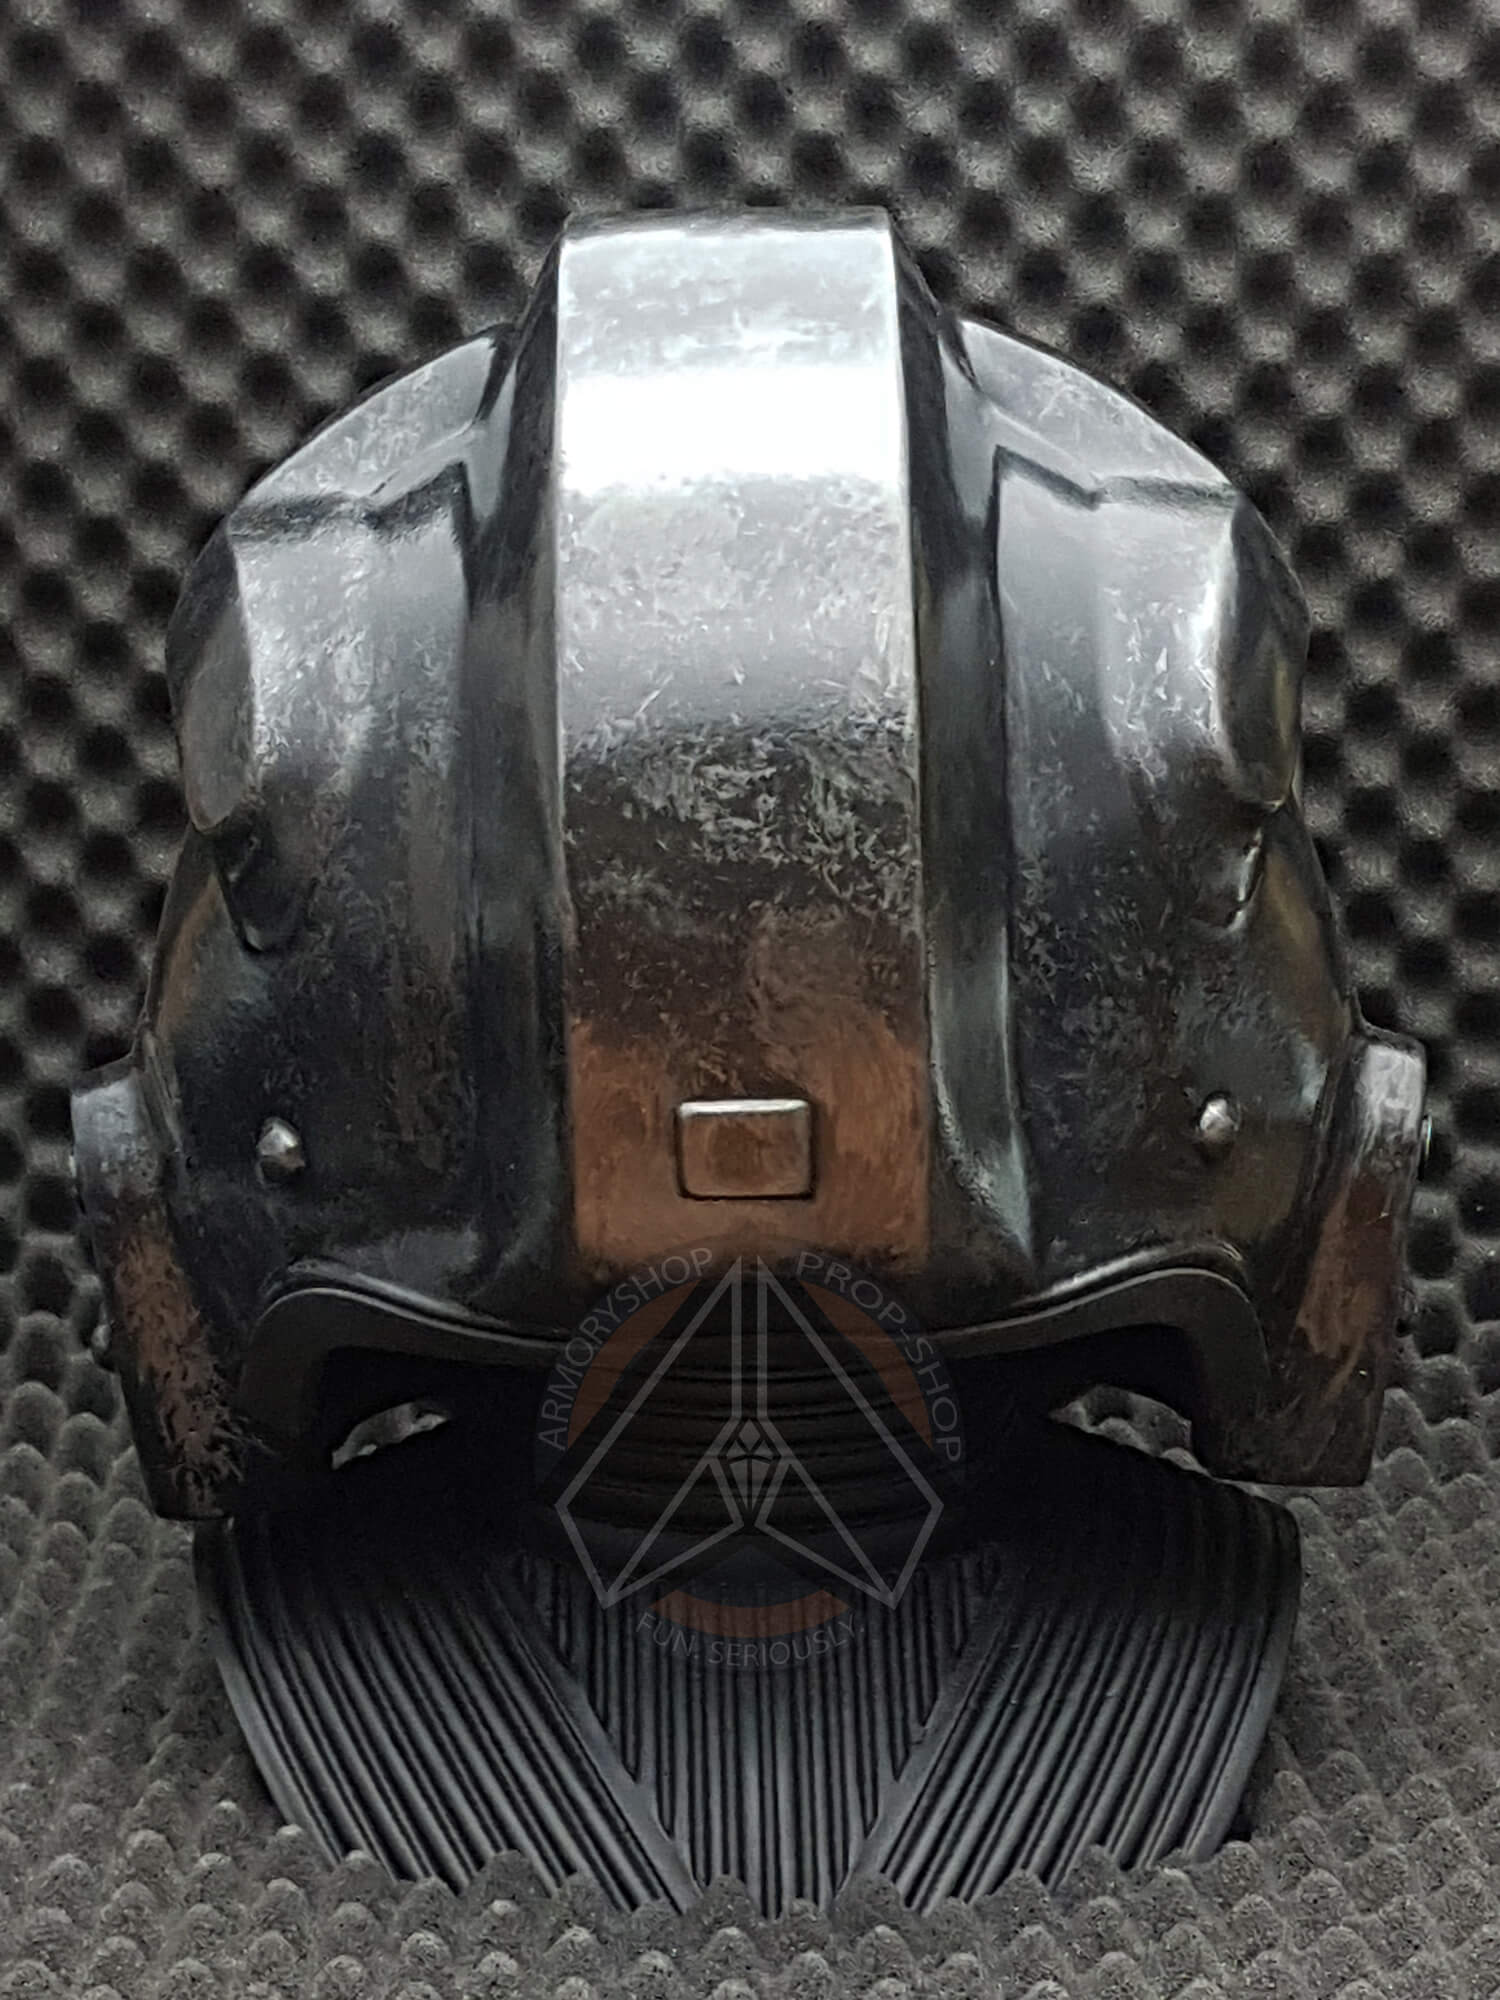 Griff Halloran - R1 Imperial TIE Helmet (Art Project)